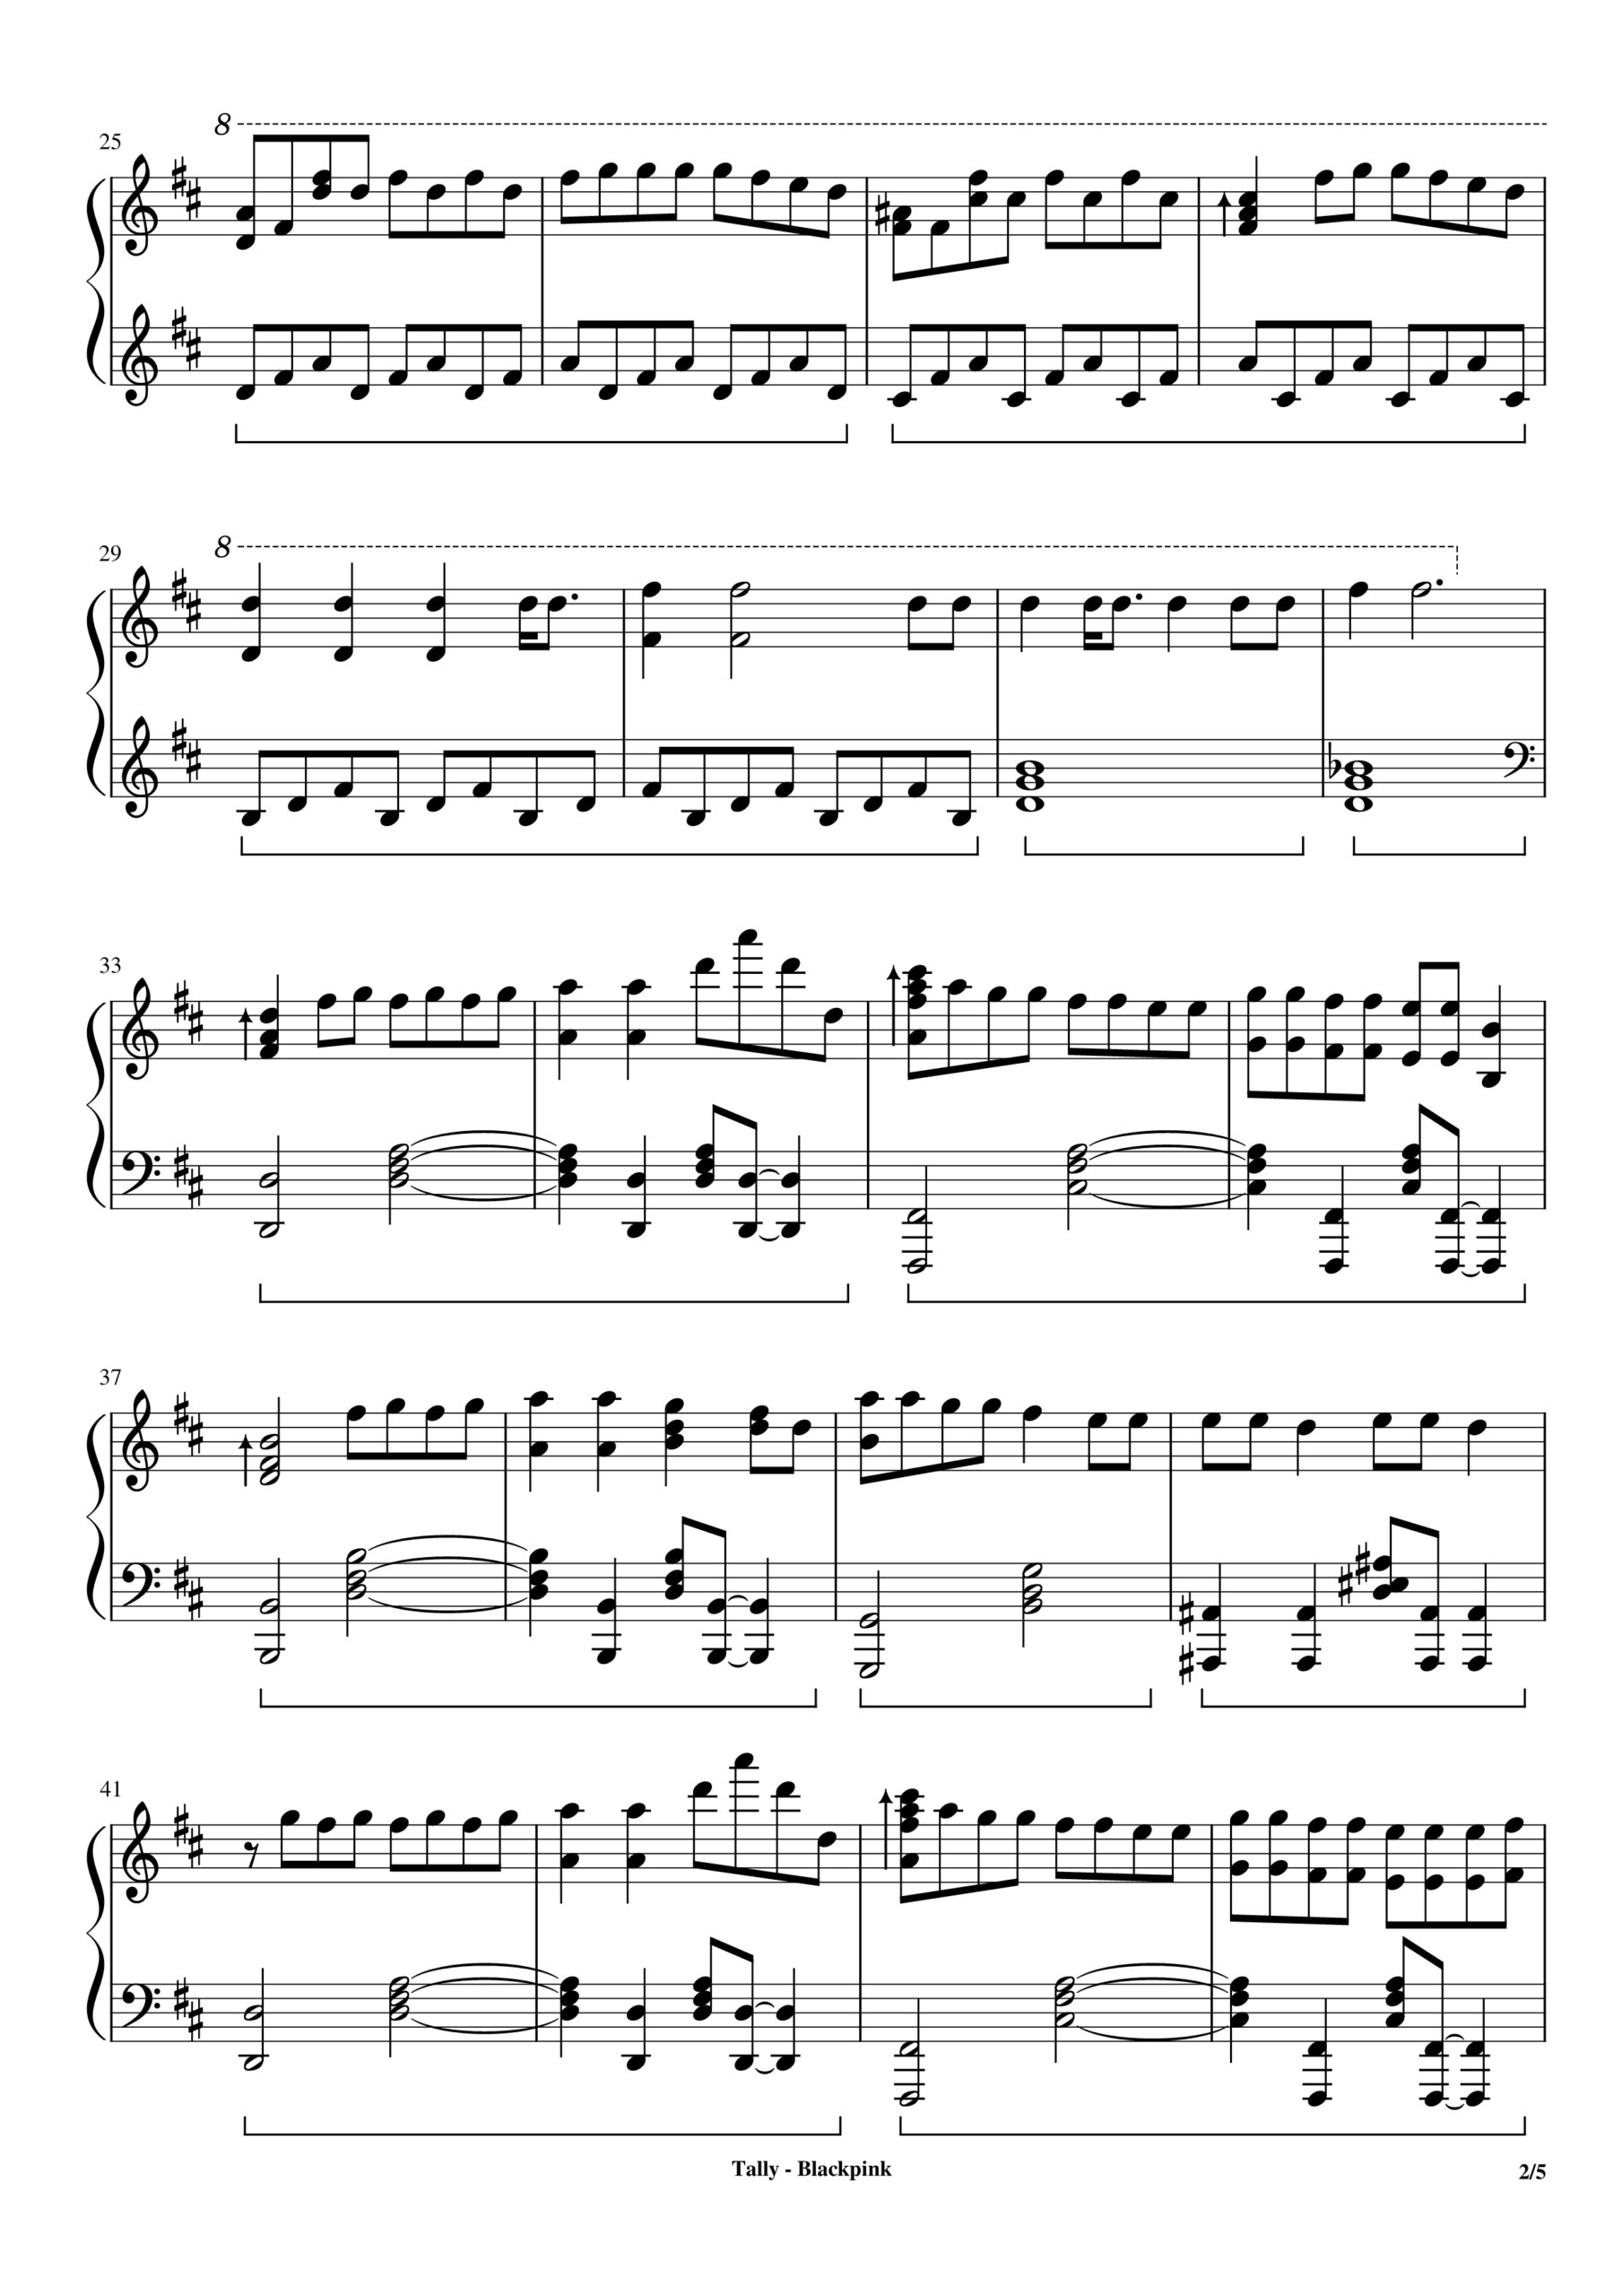 Blackpink, Tally Piano Sheet Music Page 2